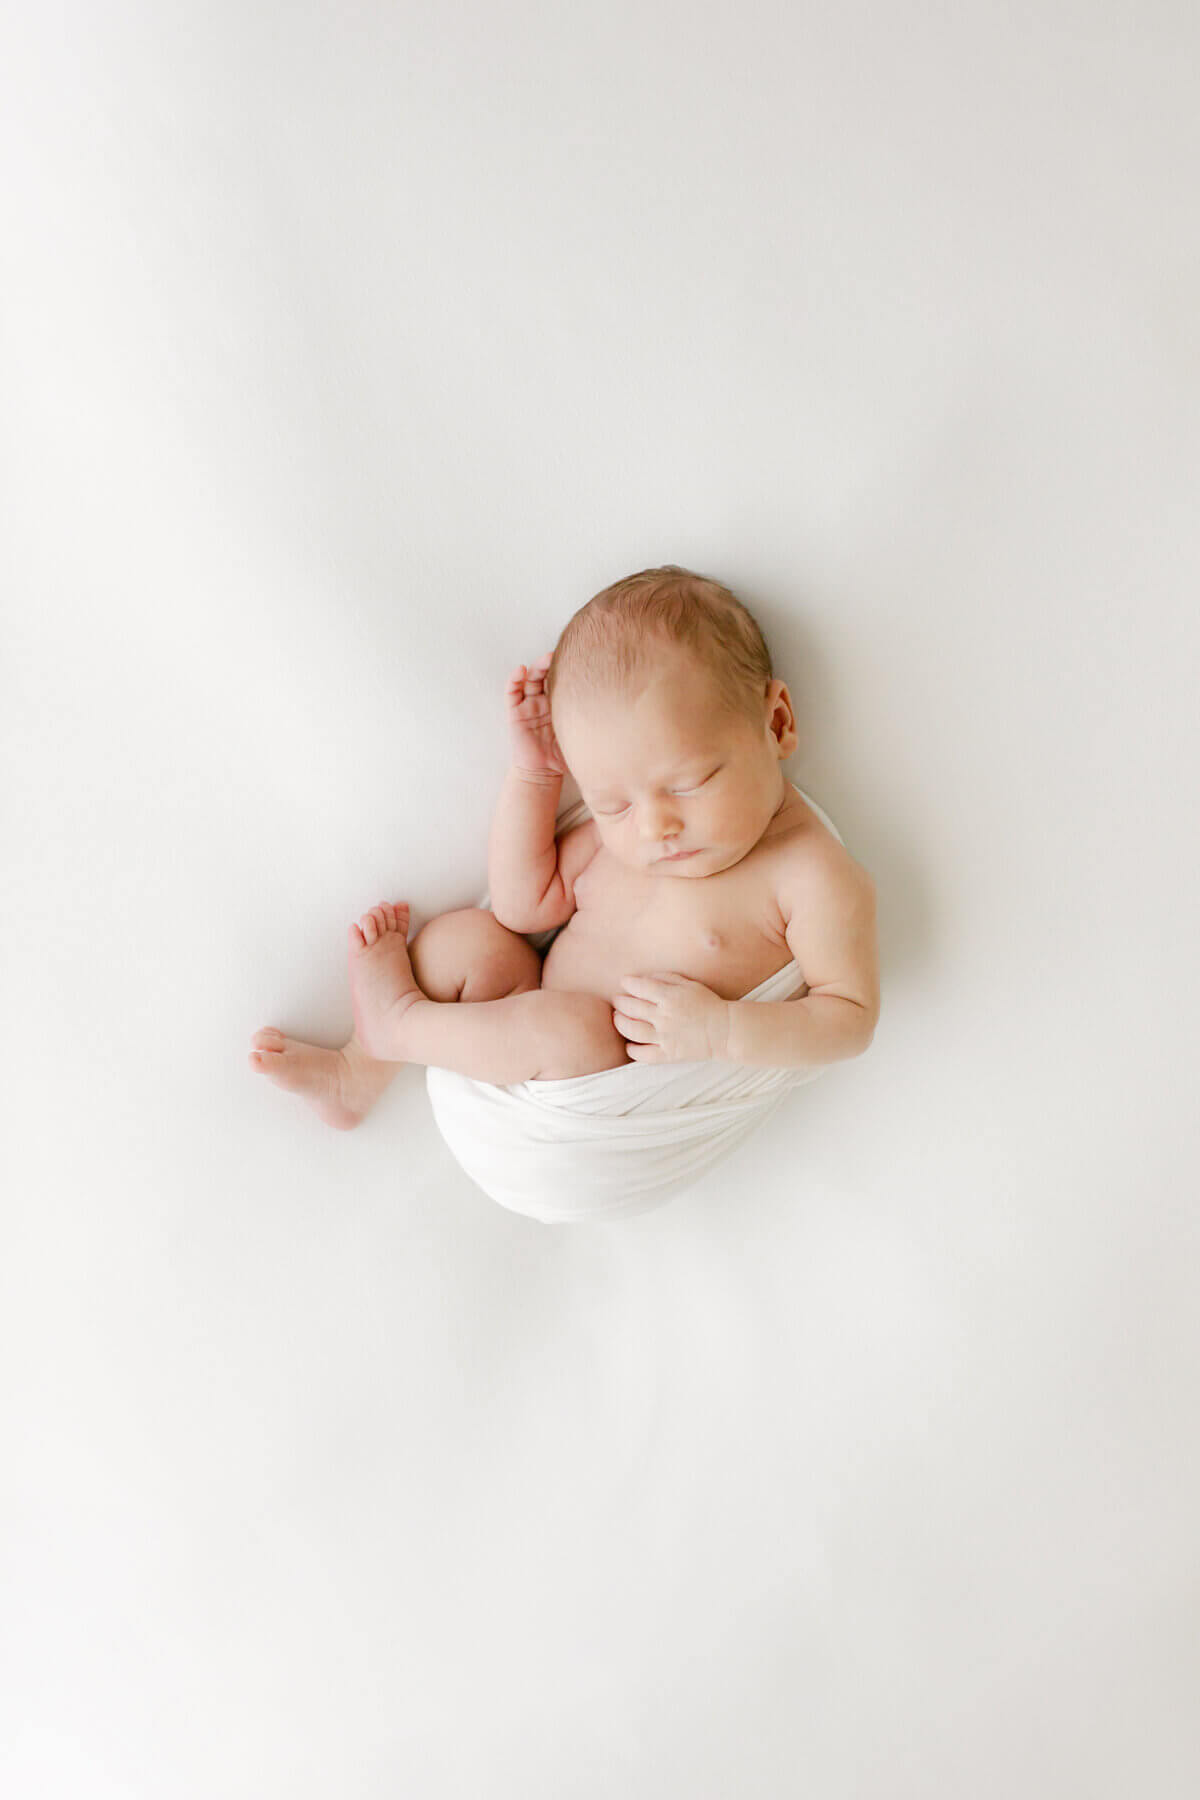 award winning photograph of omaha newborn taken by Virginia Schultz Photography